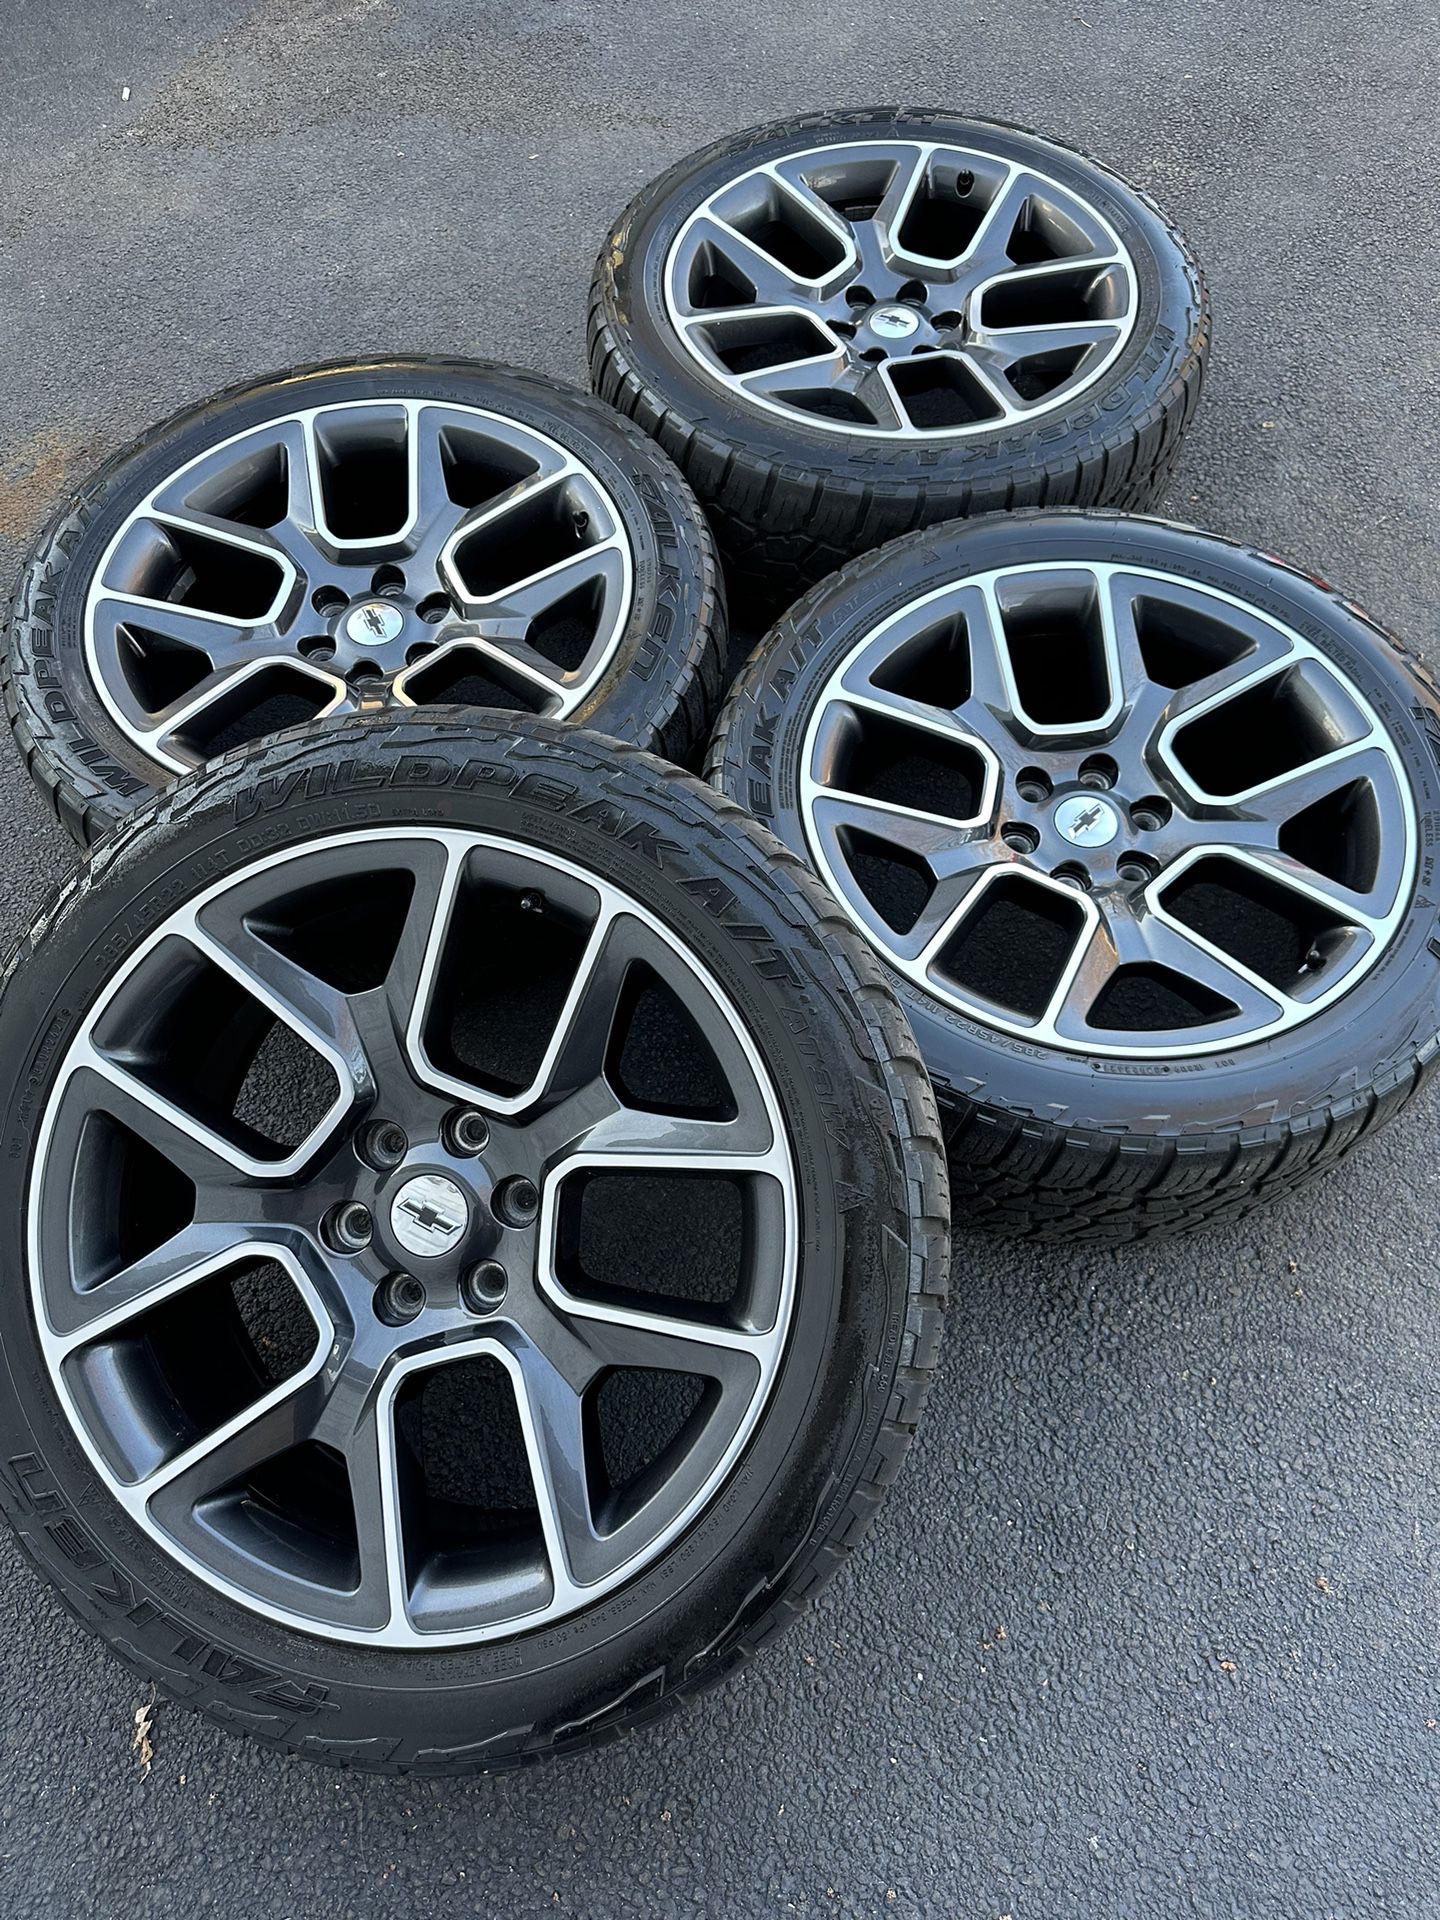 22" Chevy Silverado 1500 Tahoe Suburban Avalanche Wheels Rims And Tires 285/45/22 Falken Wildpeak $1,450